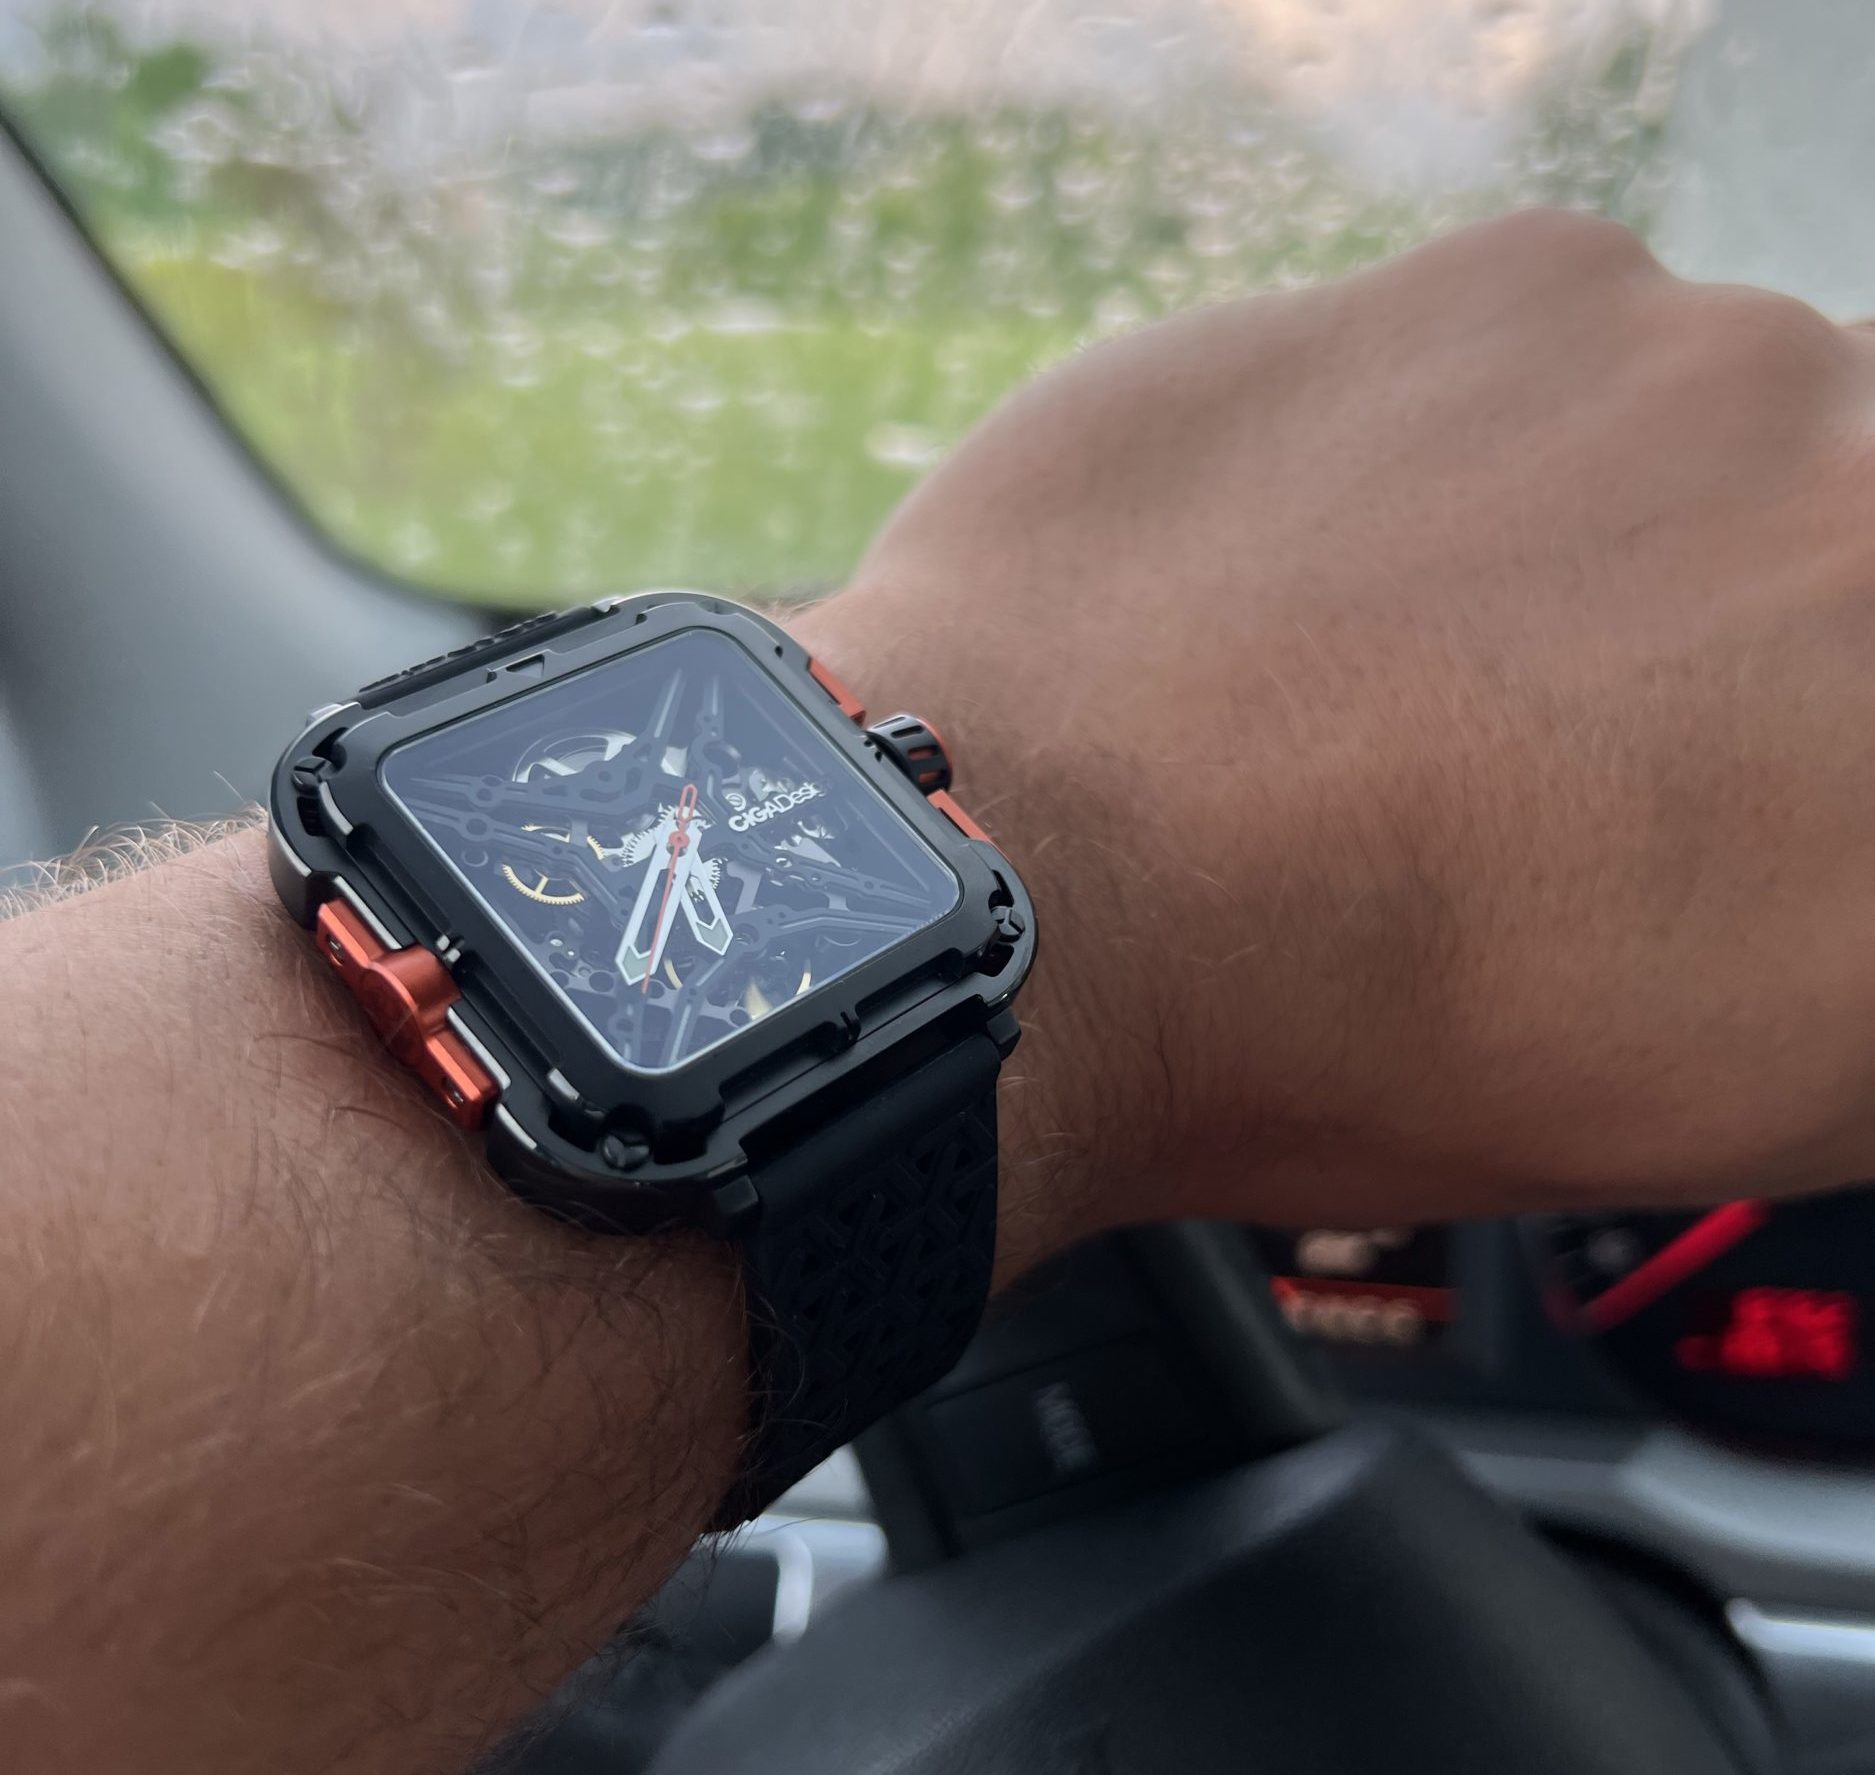 Extravagant timepiece on a wrist behind the car wheel